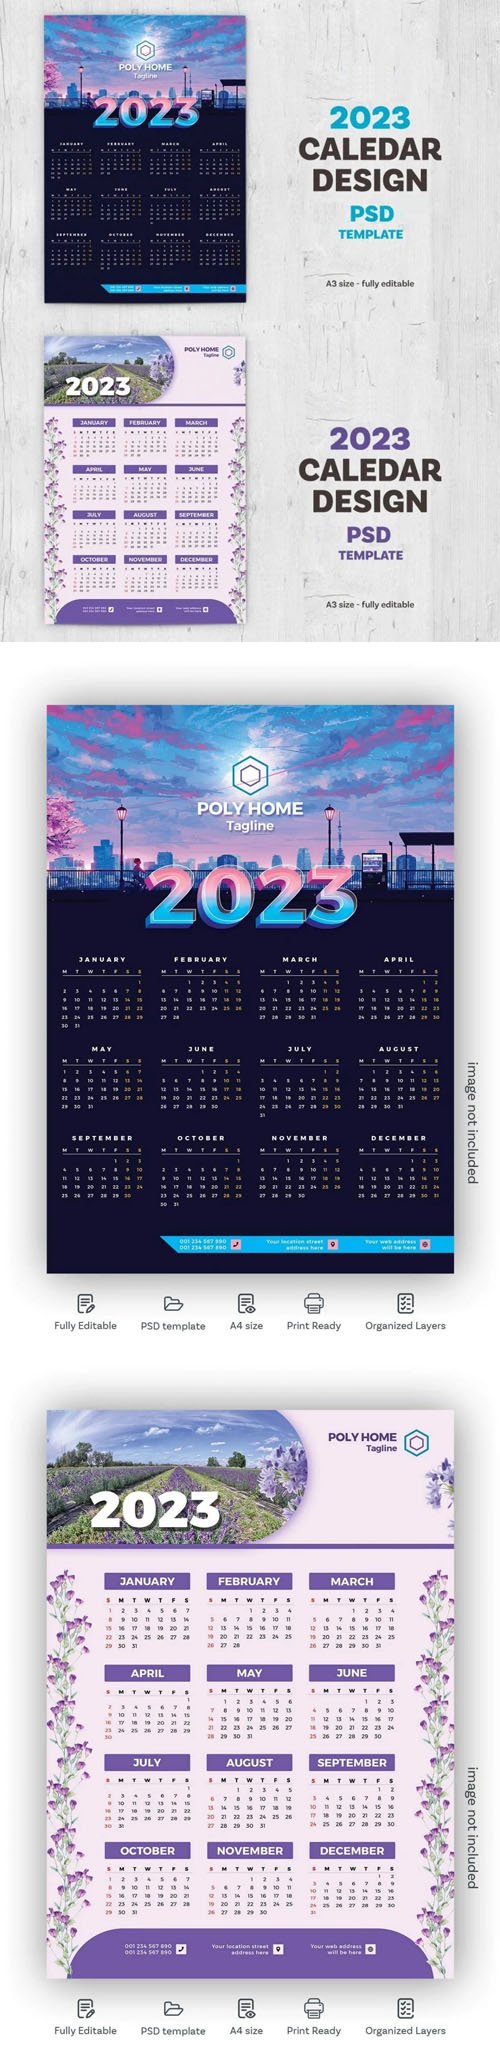 Two Wall Calendar 2023 PSD Templates